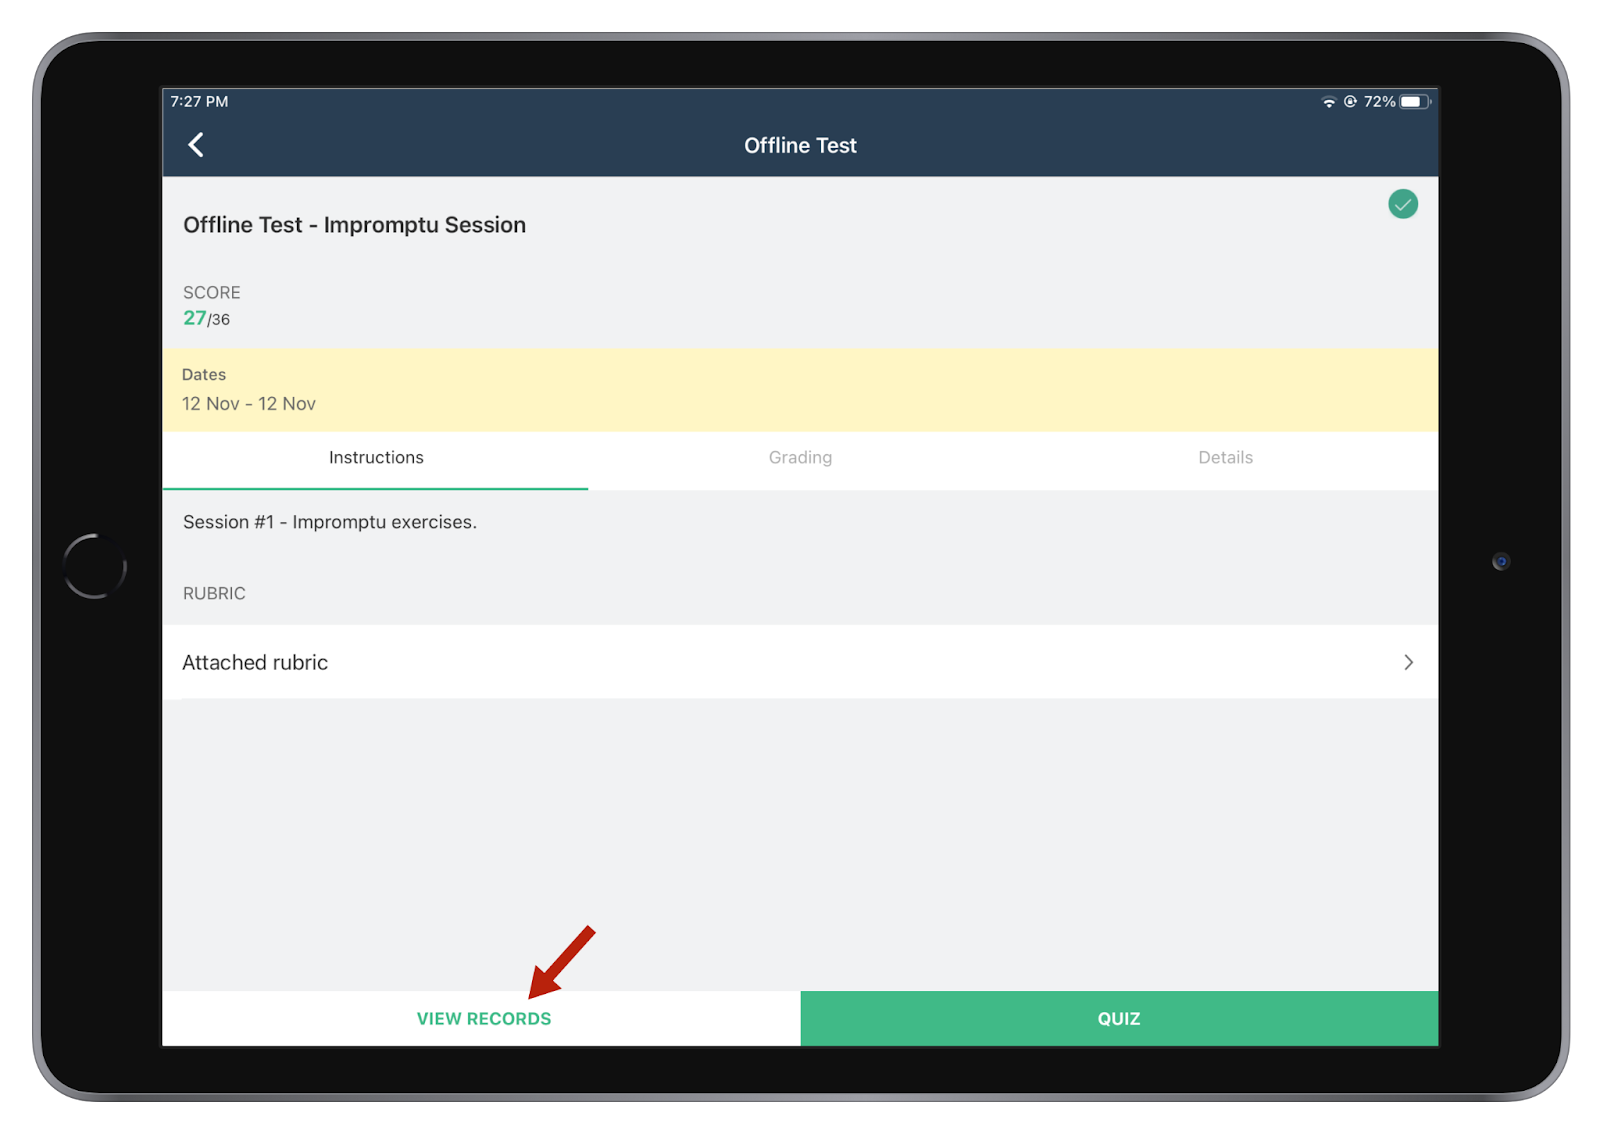 Teamie mobile apps update - offline test records